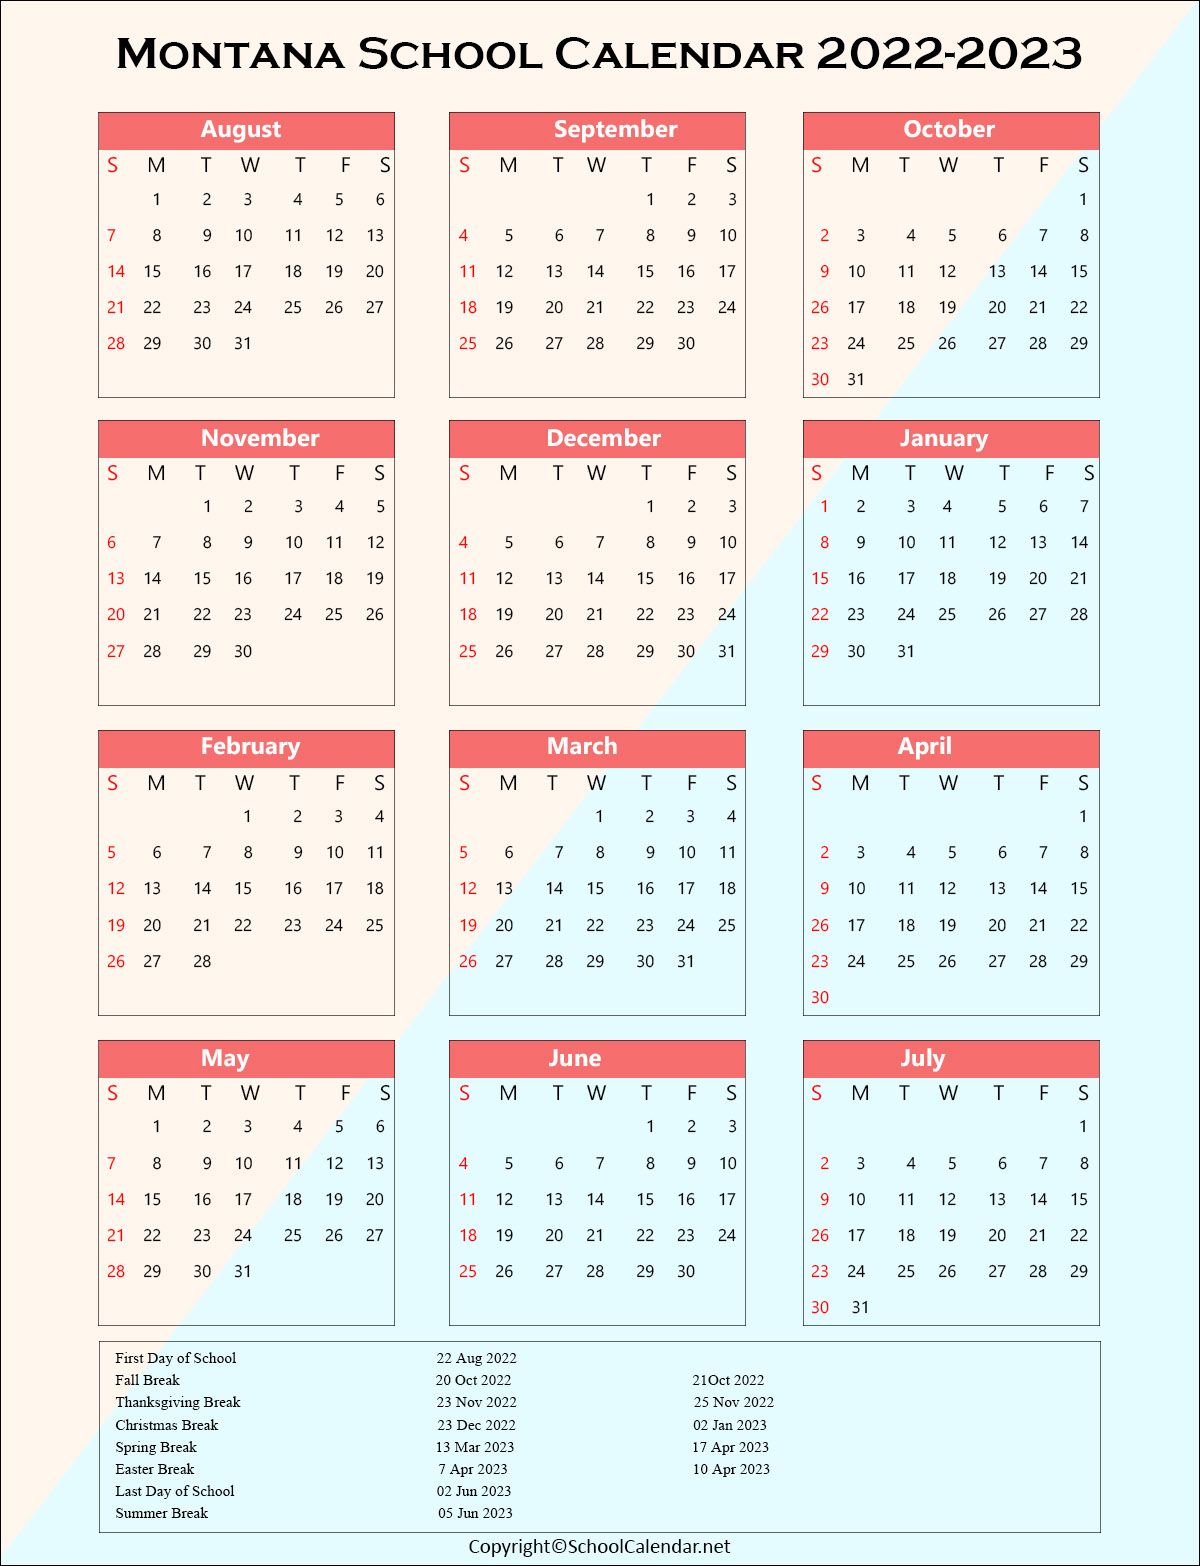 Montana School Holiday Calendar 2022